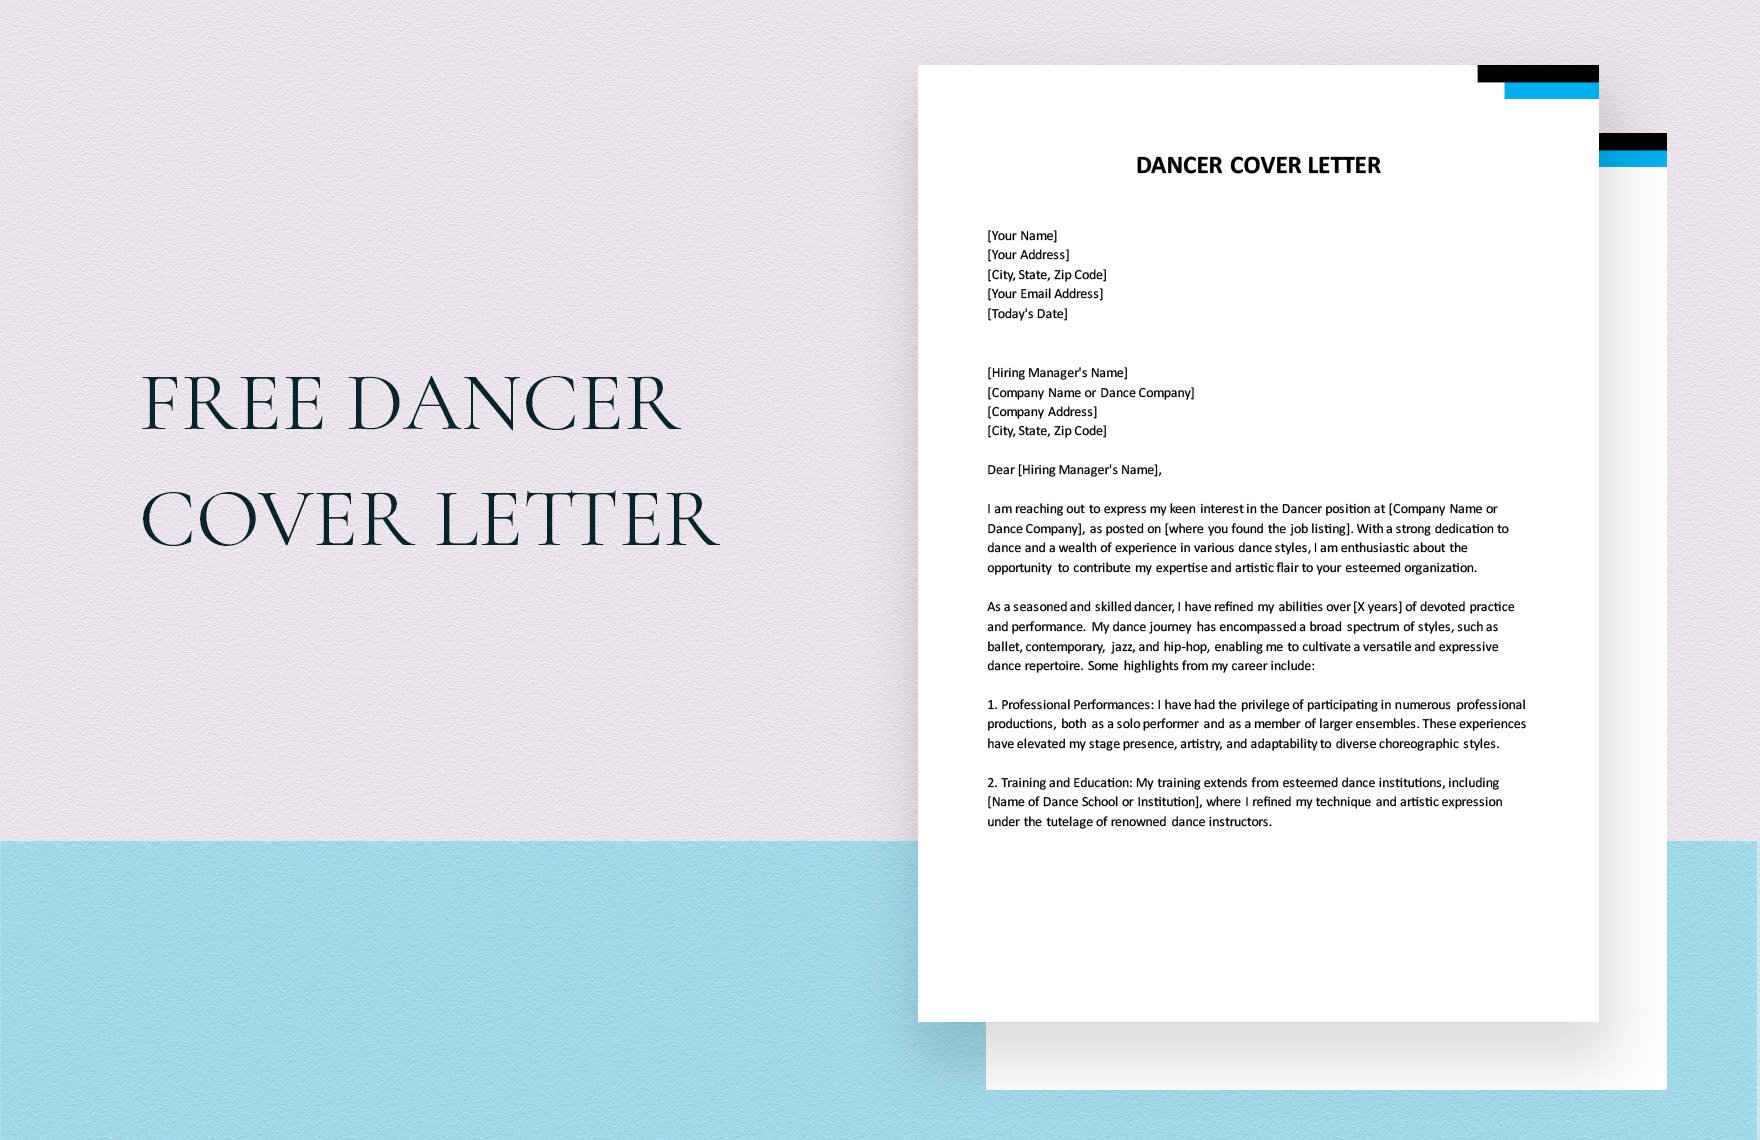 Dancer Cover Letter